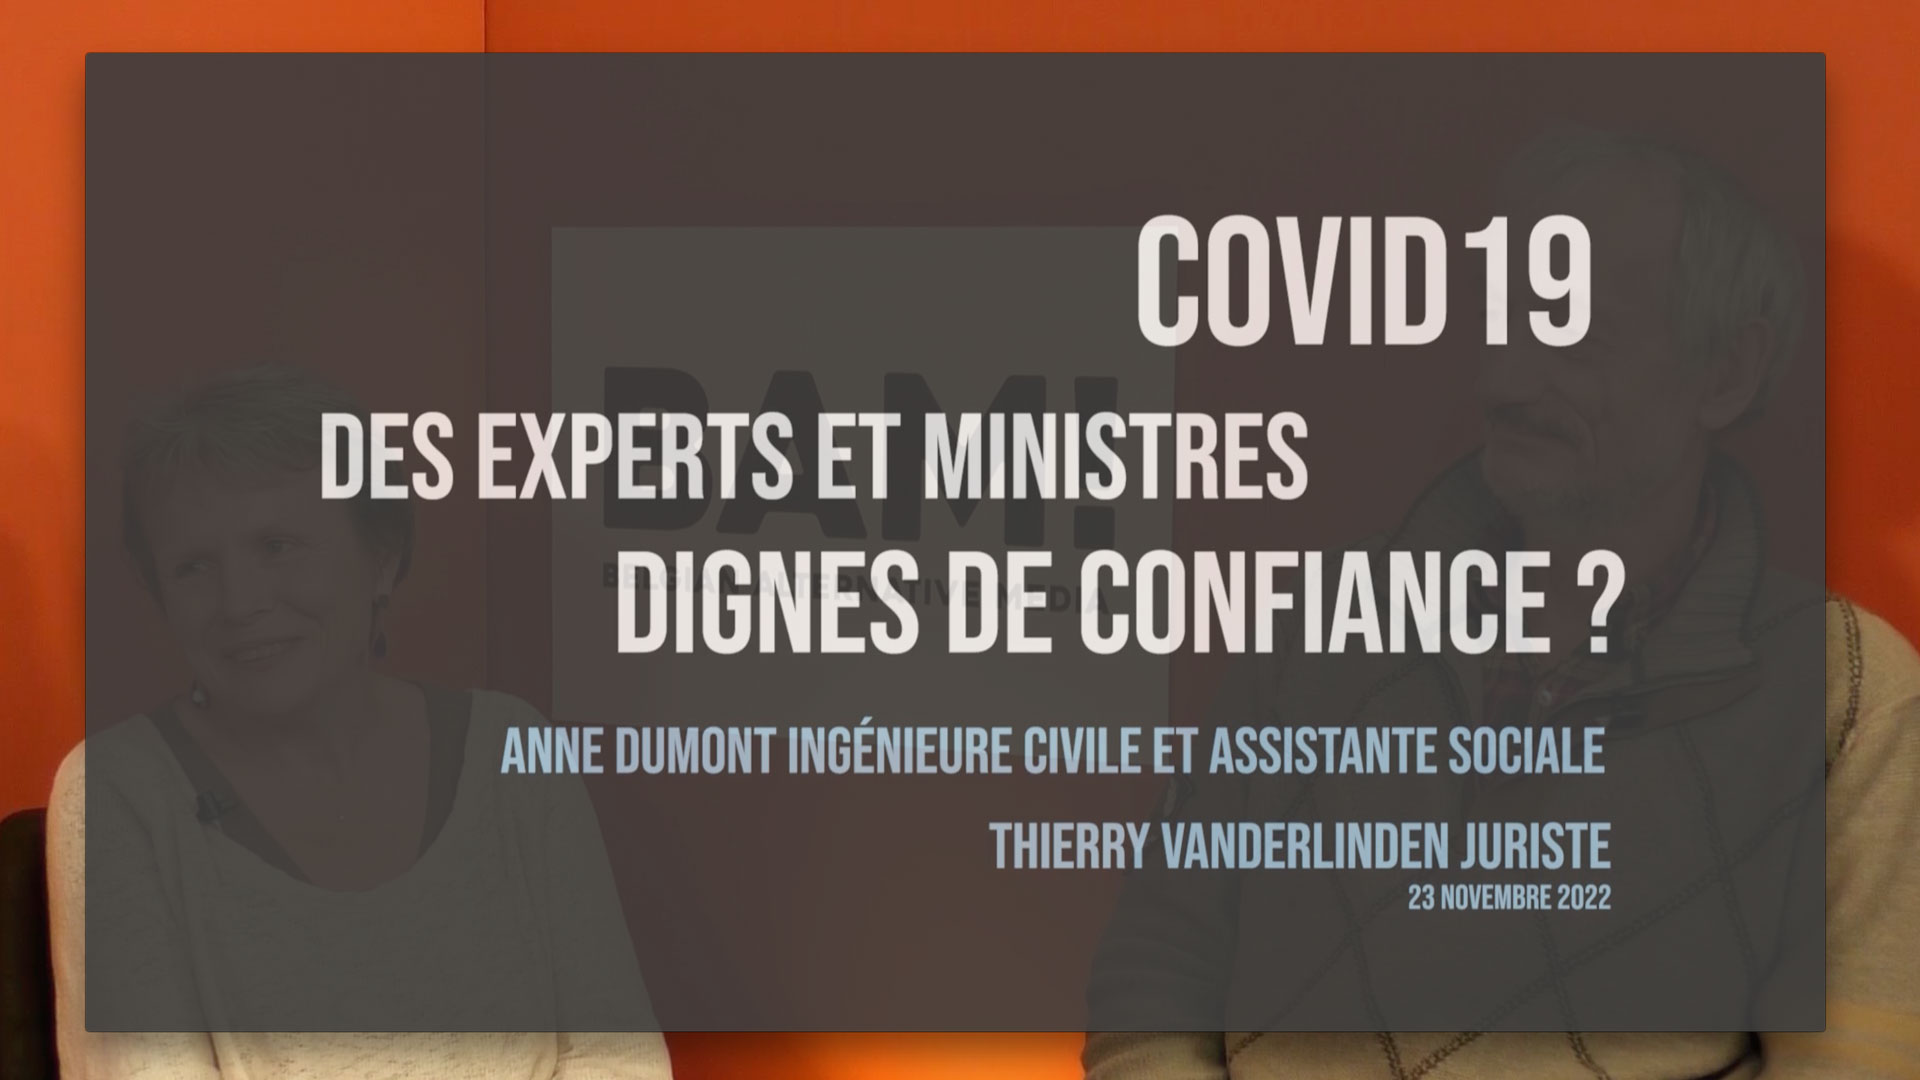 Covid19, des experts et ministres dignes de confiance ?